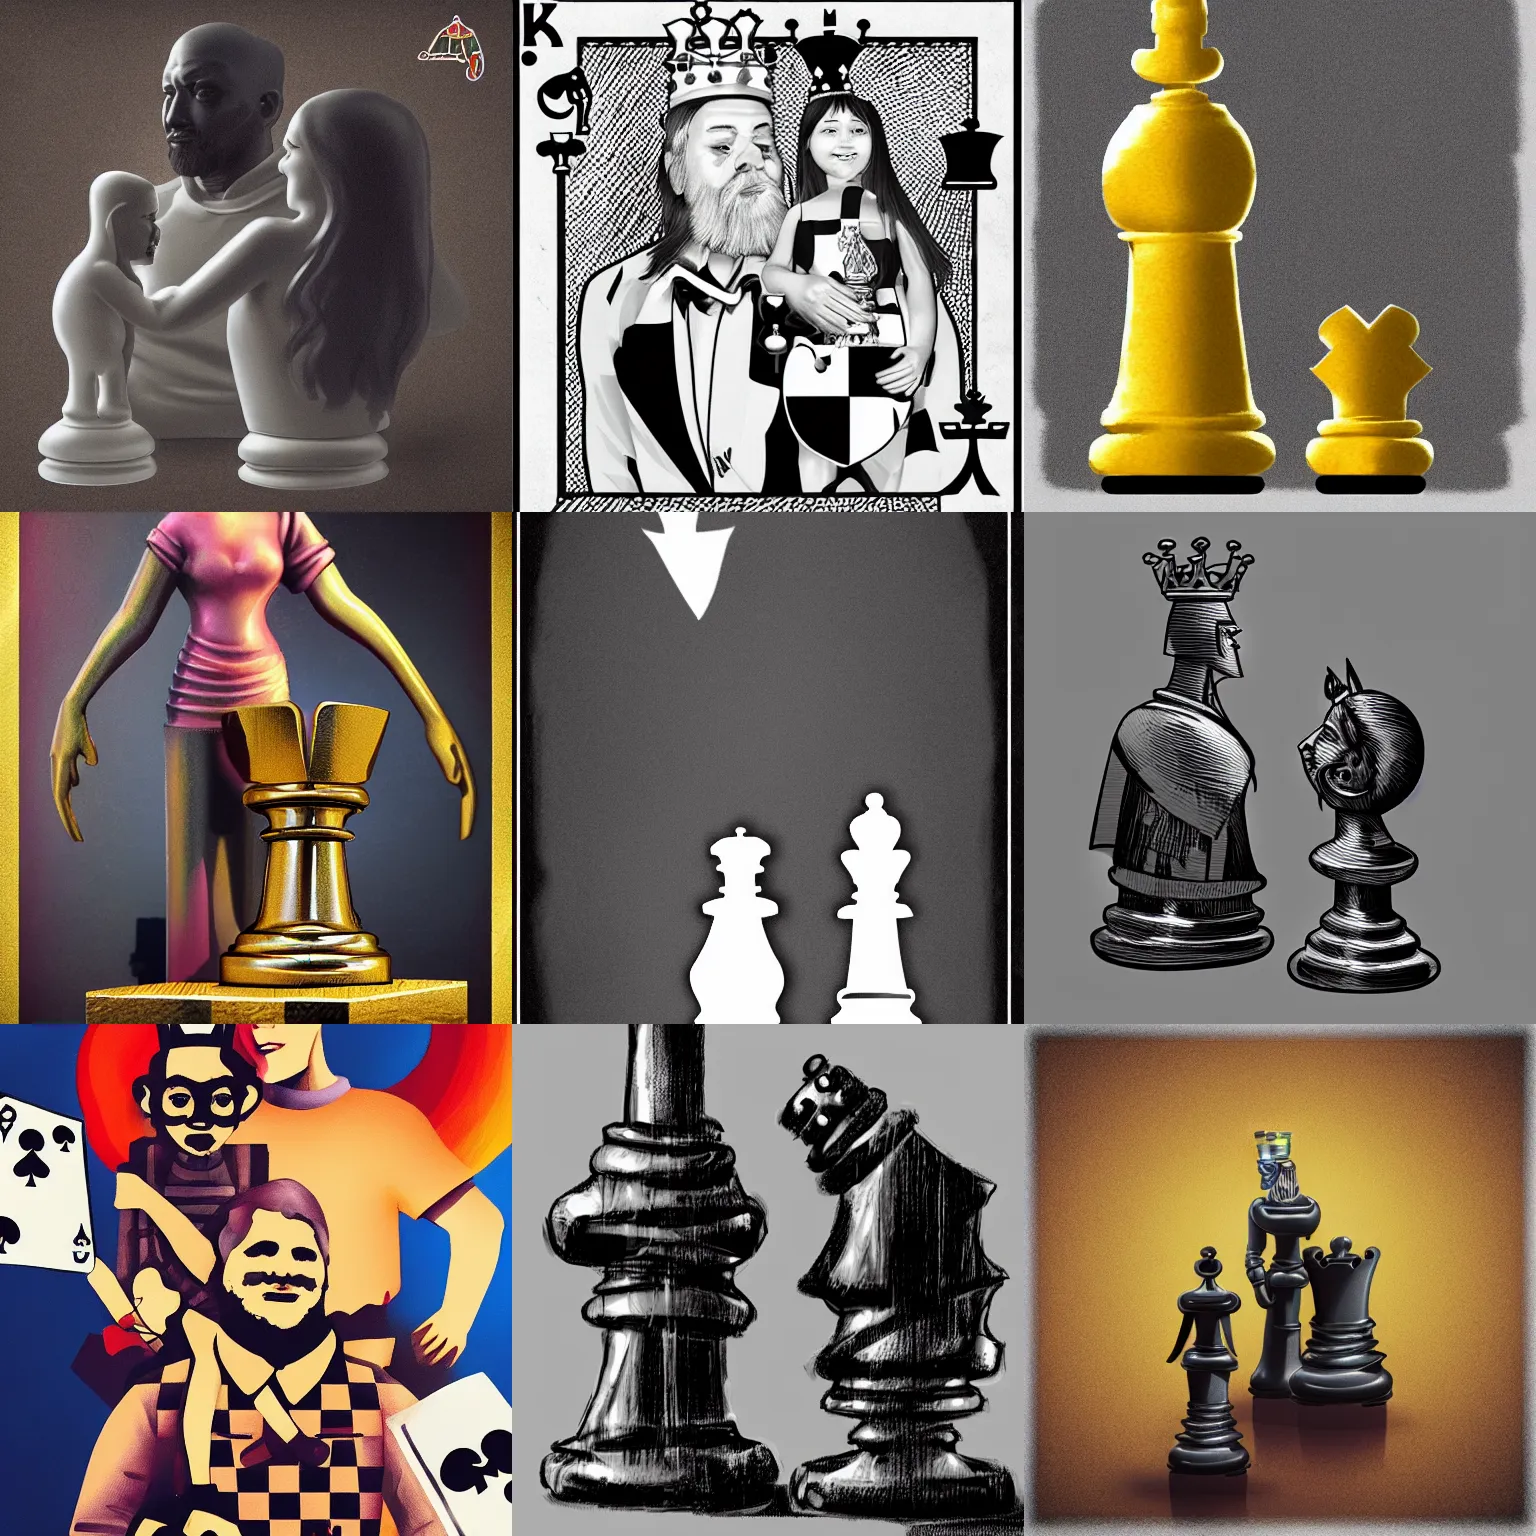 ArtStation - Chess Set